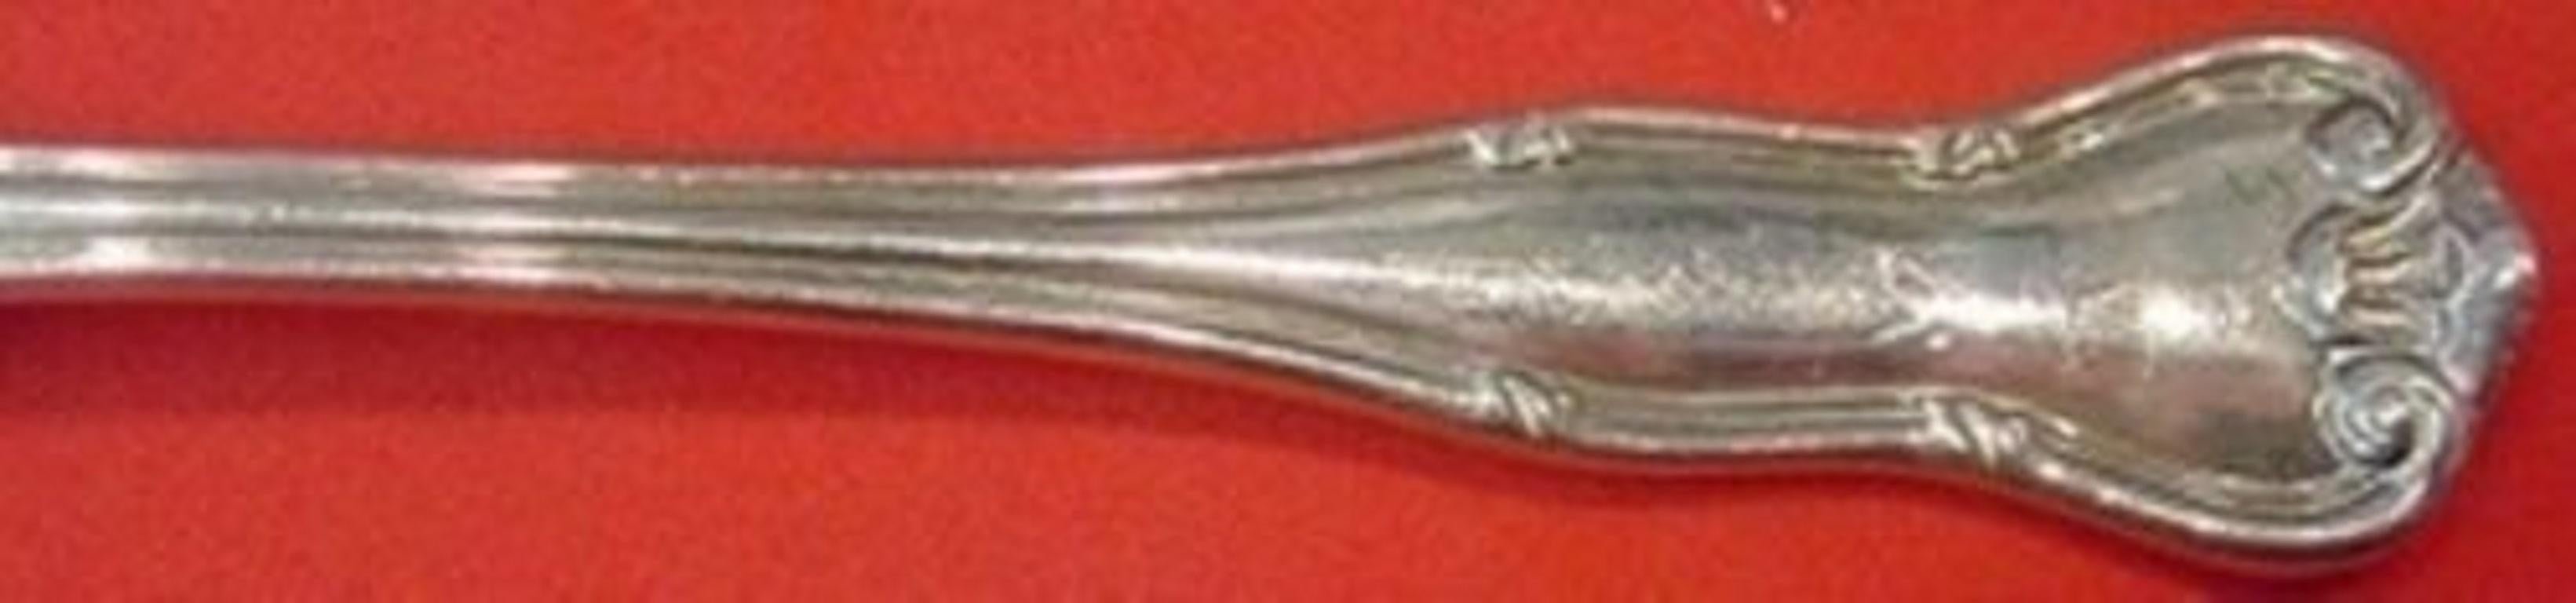 Sterling silver cocktail fork, 5 7/8